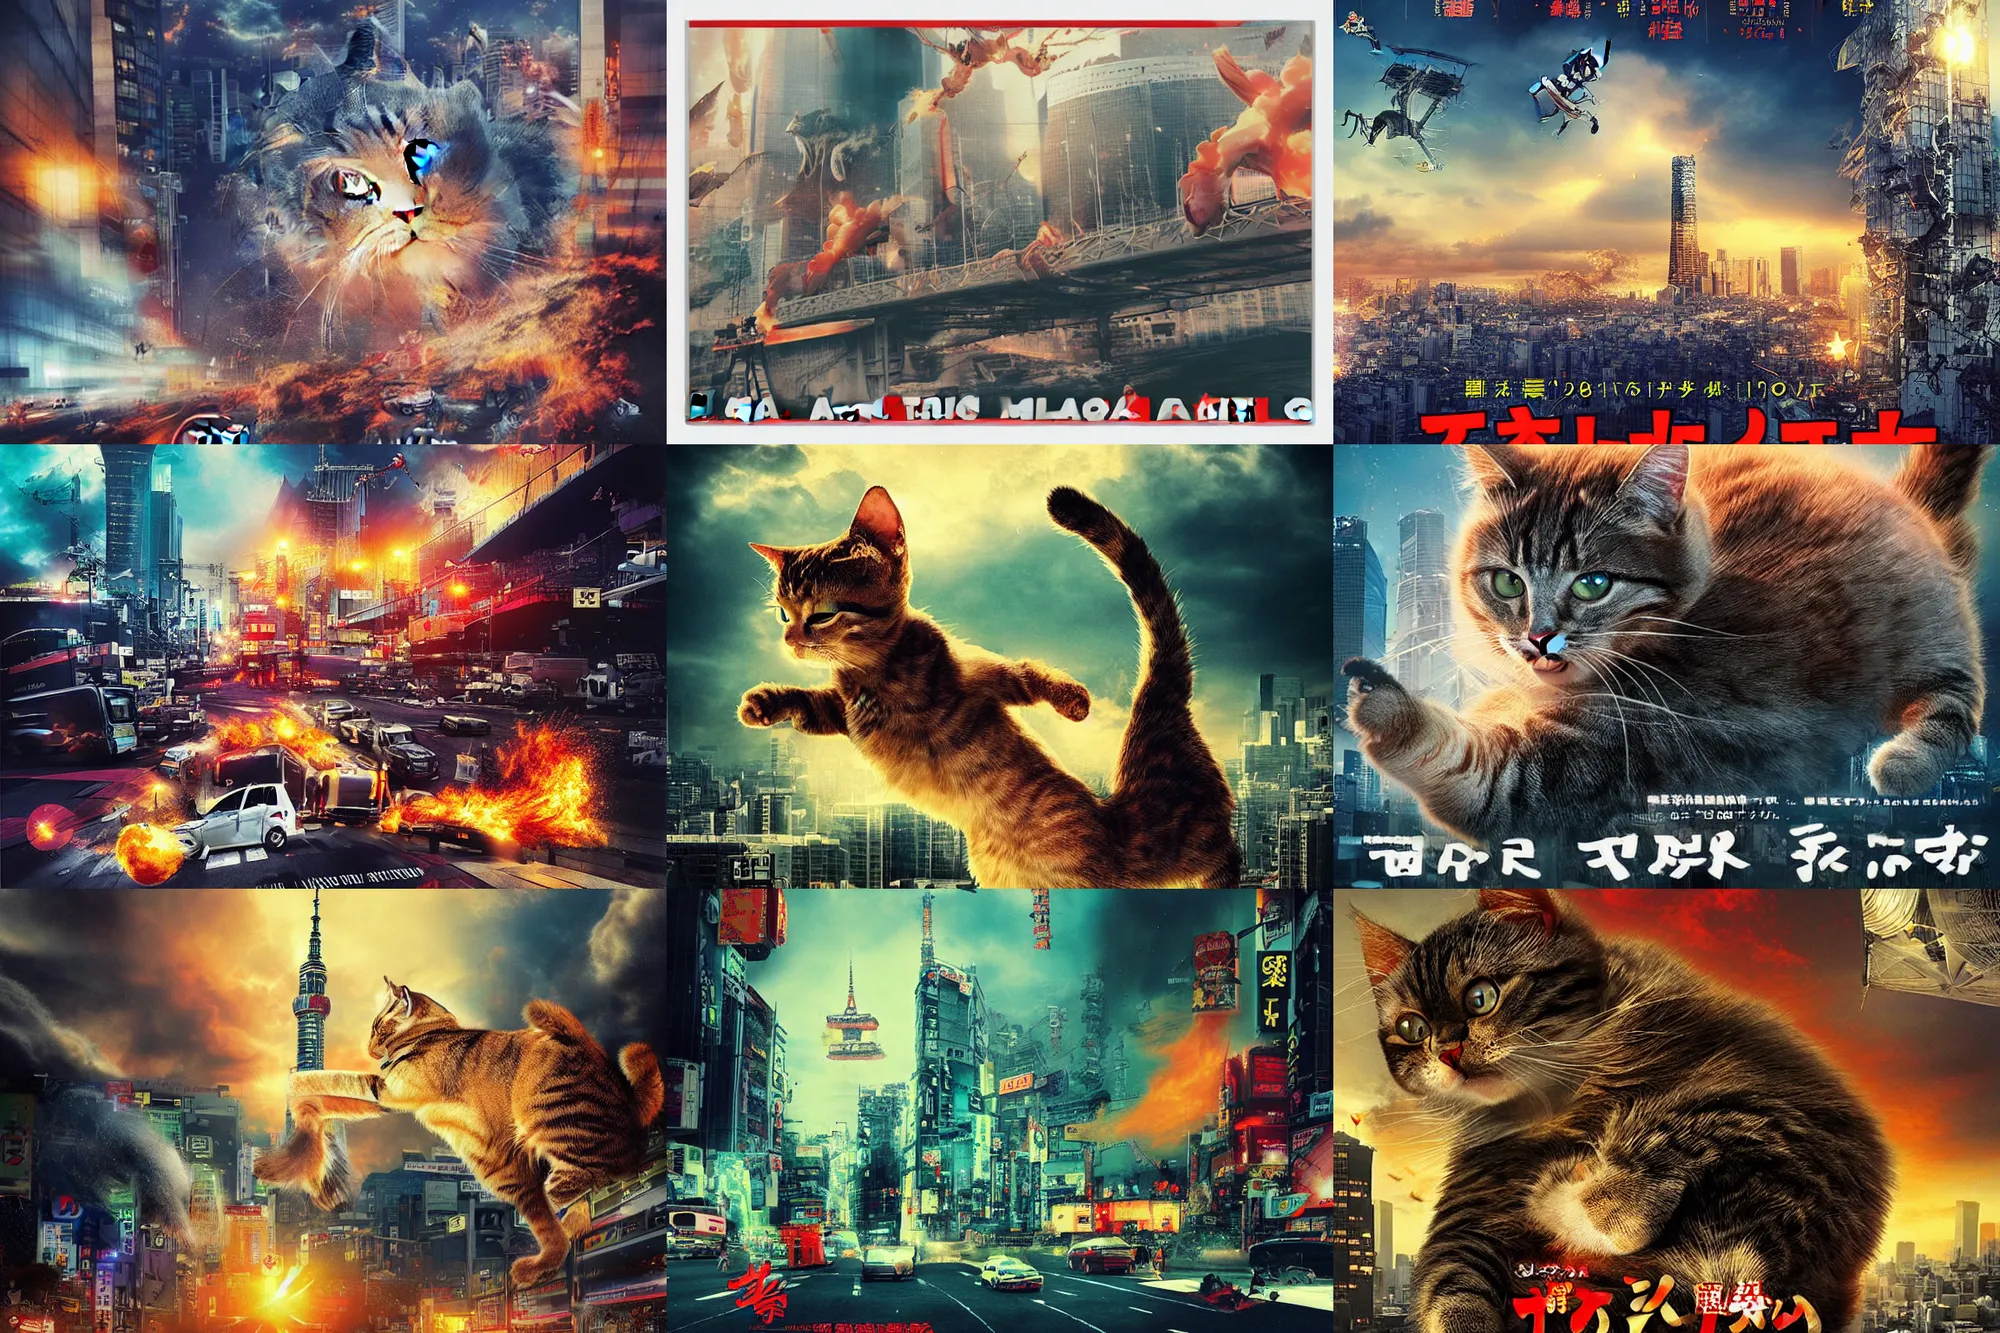 Image similar to “cat attacking Tokyo, disaster movie poster, cgstudio”